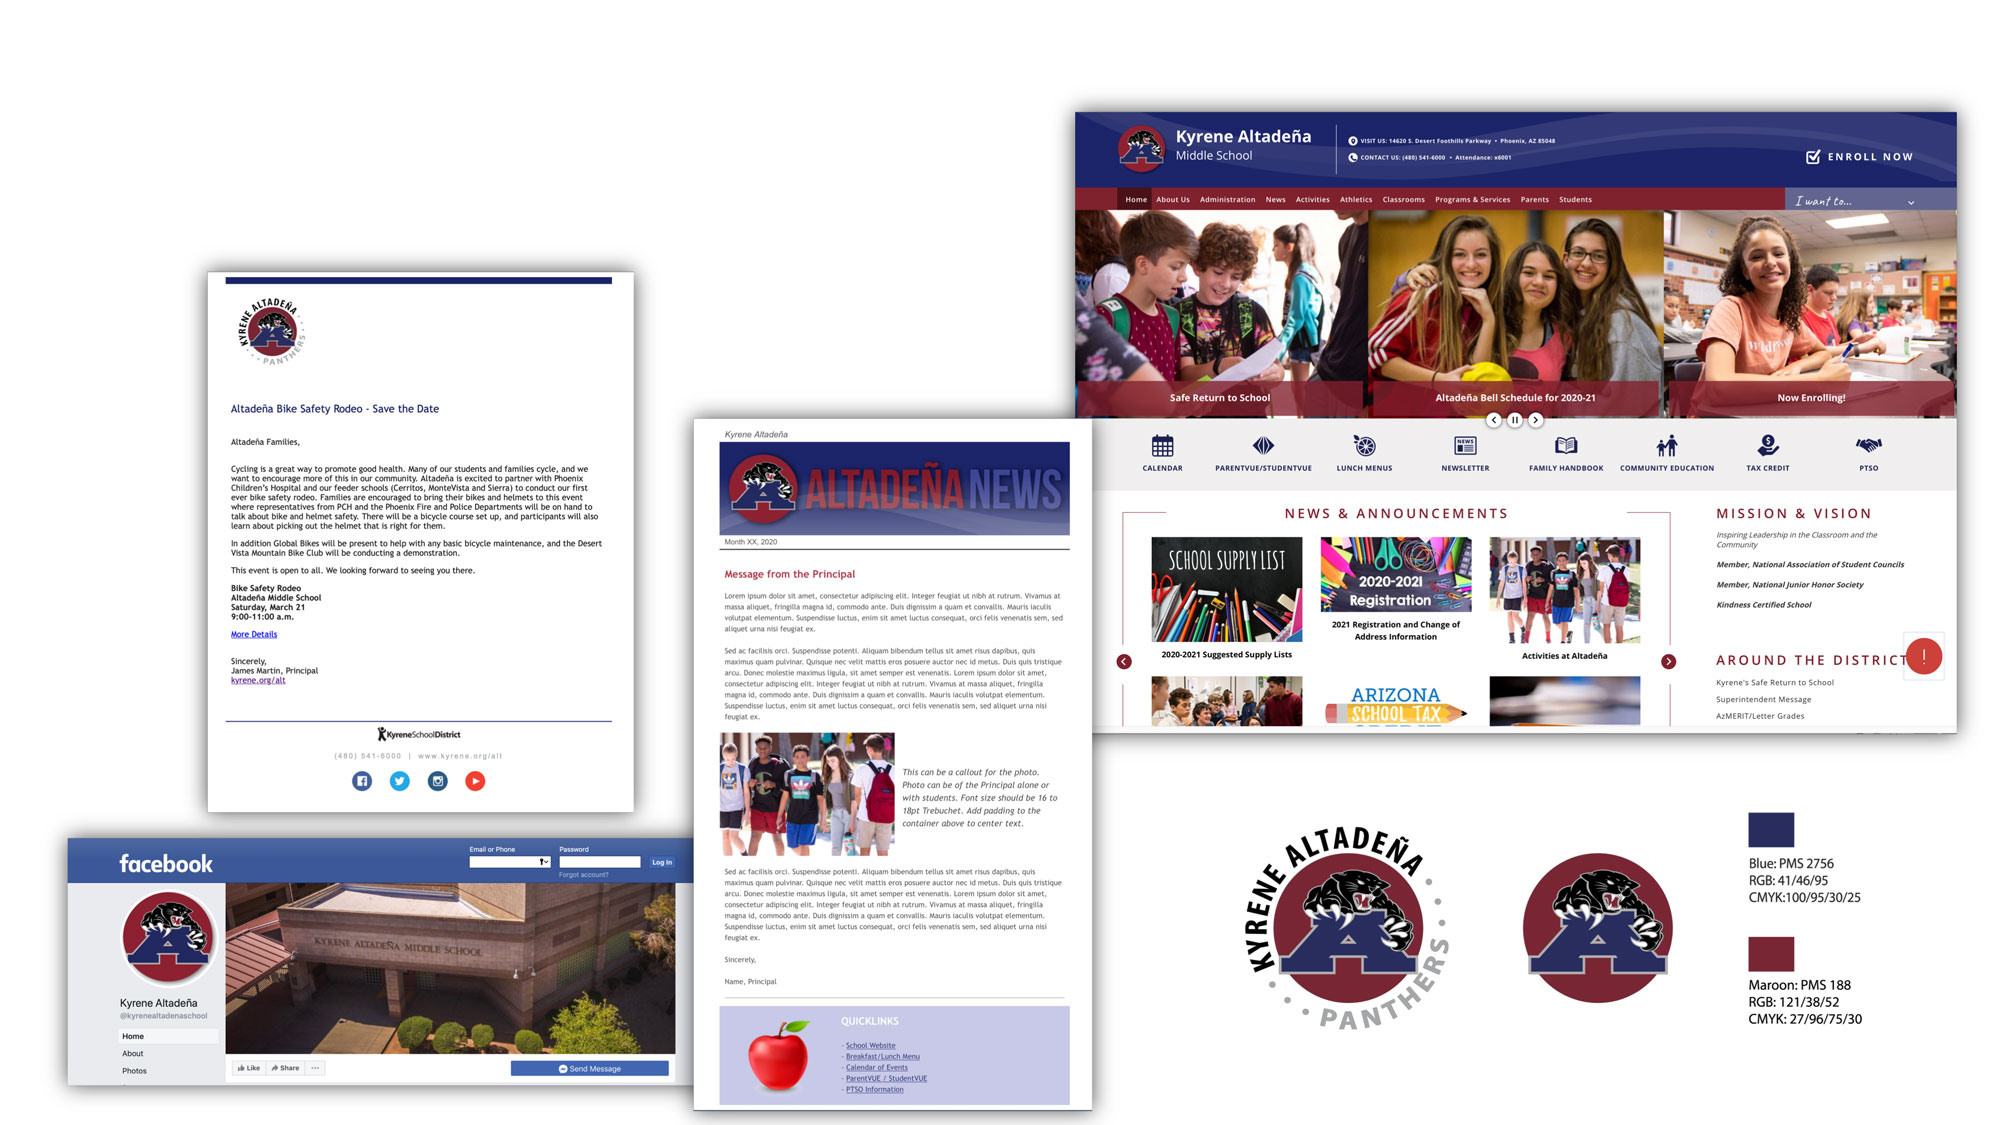 featured image five:Kyrene School District - Overall School Branding